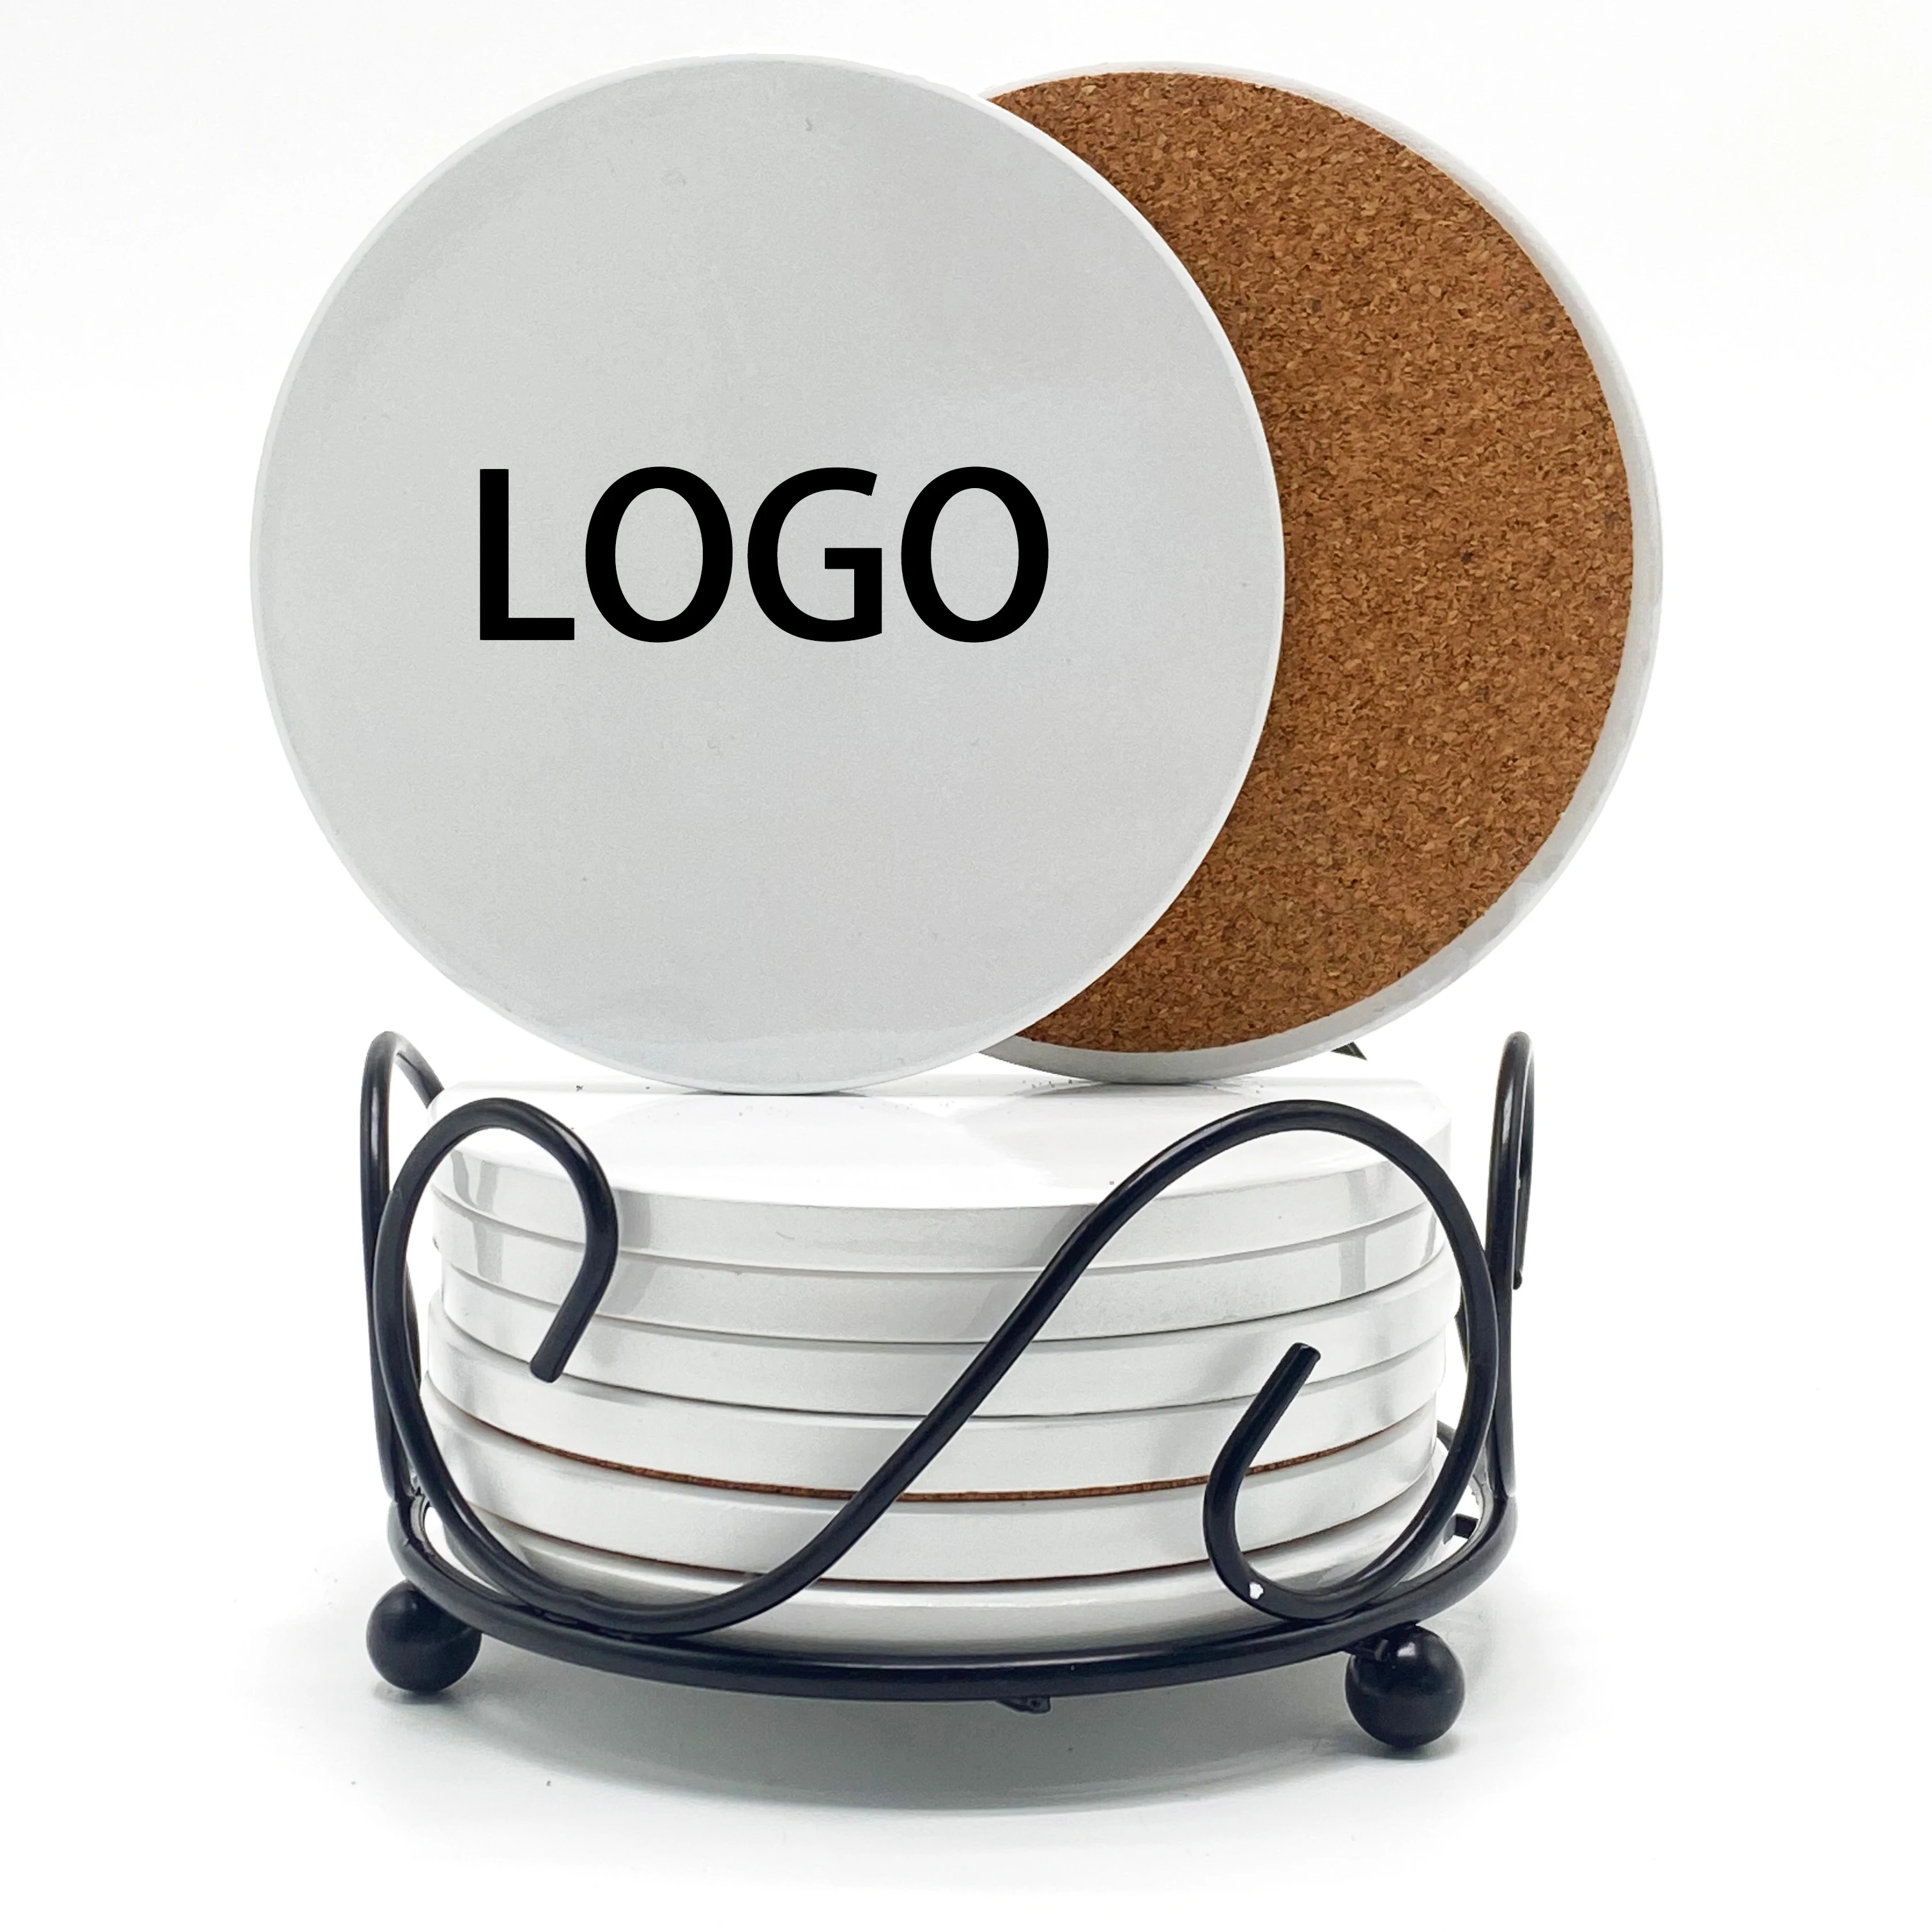 

XS ltd. Hot Coaster Custom Round Sand Stone Blanks Sublimate Ceramic Coasters for Drink